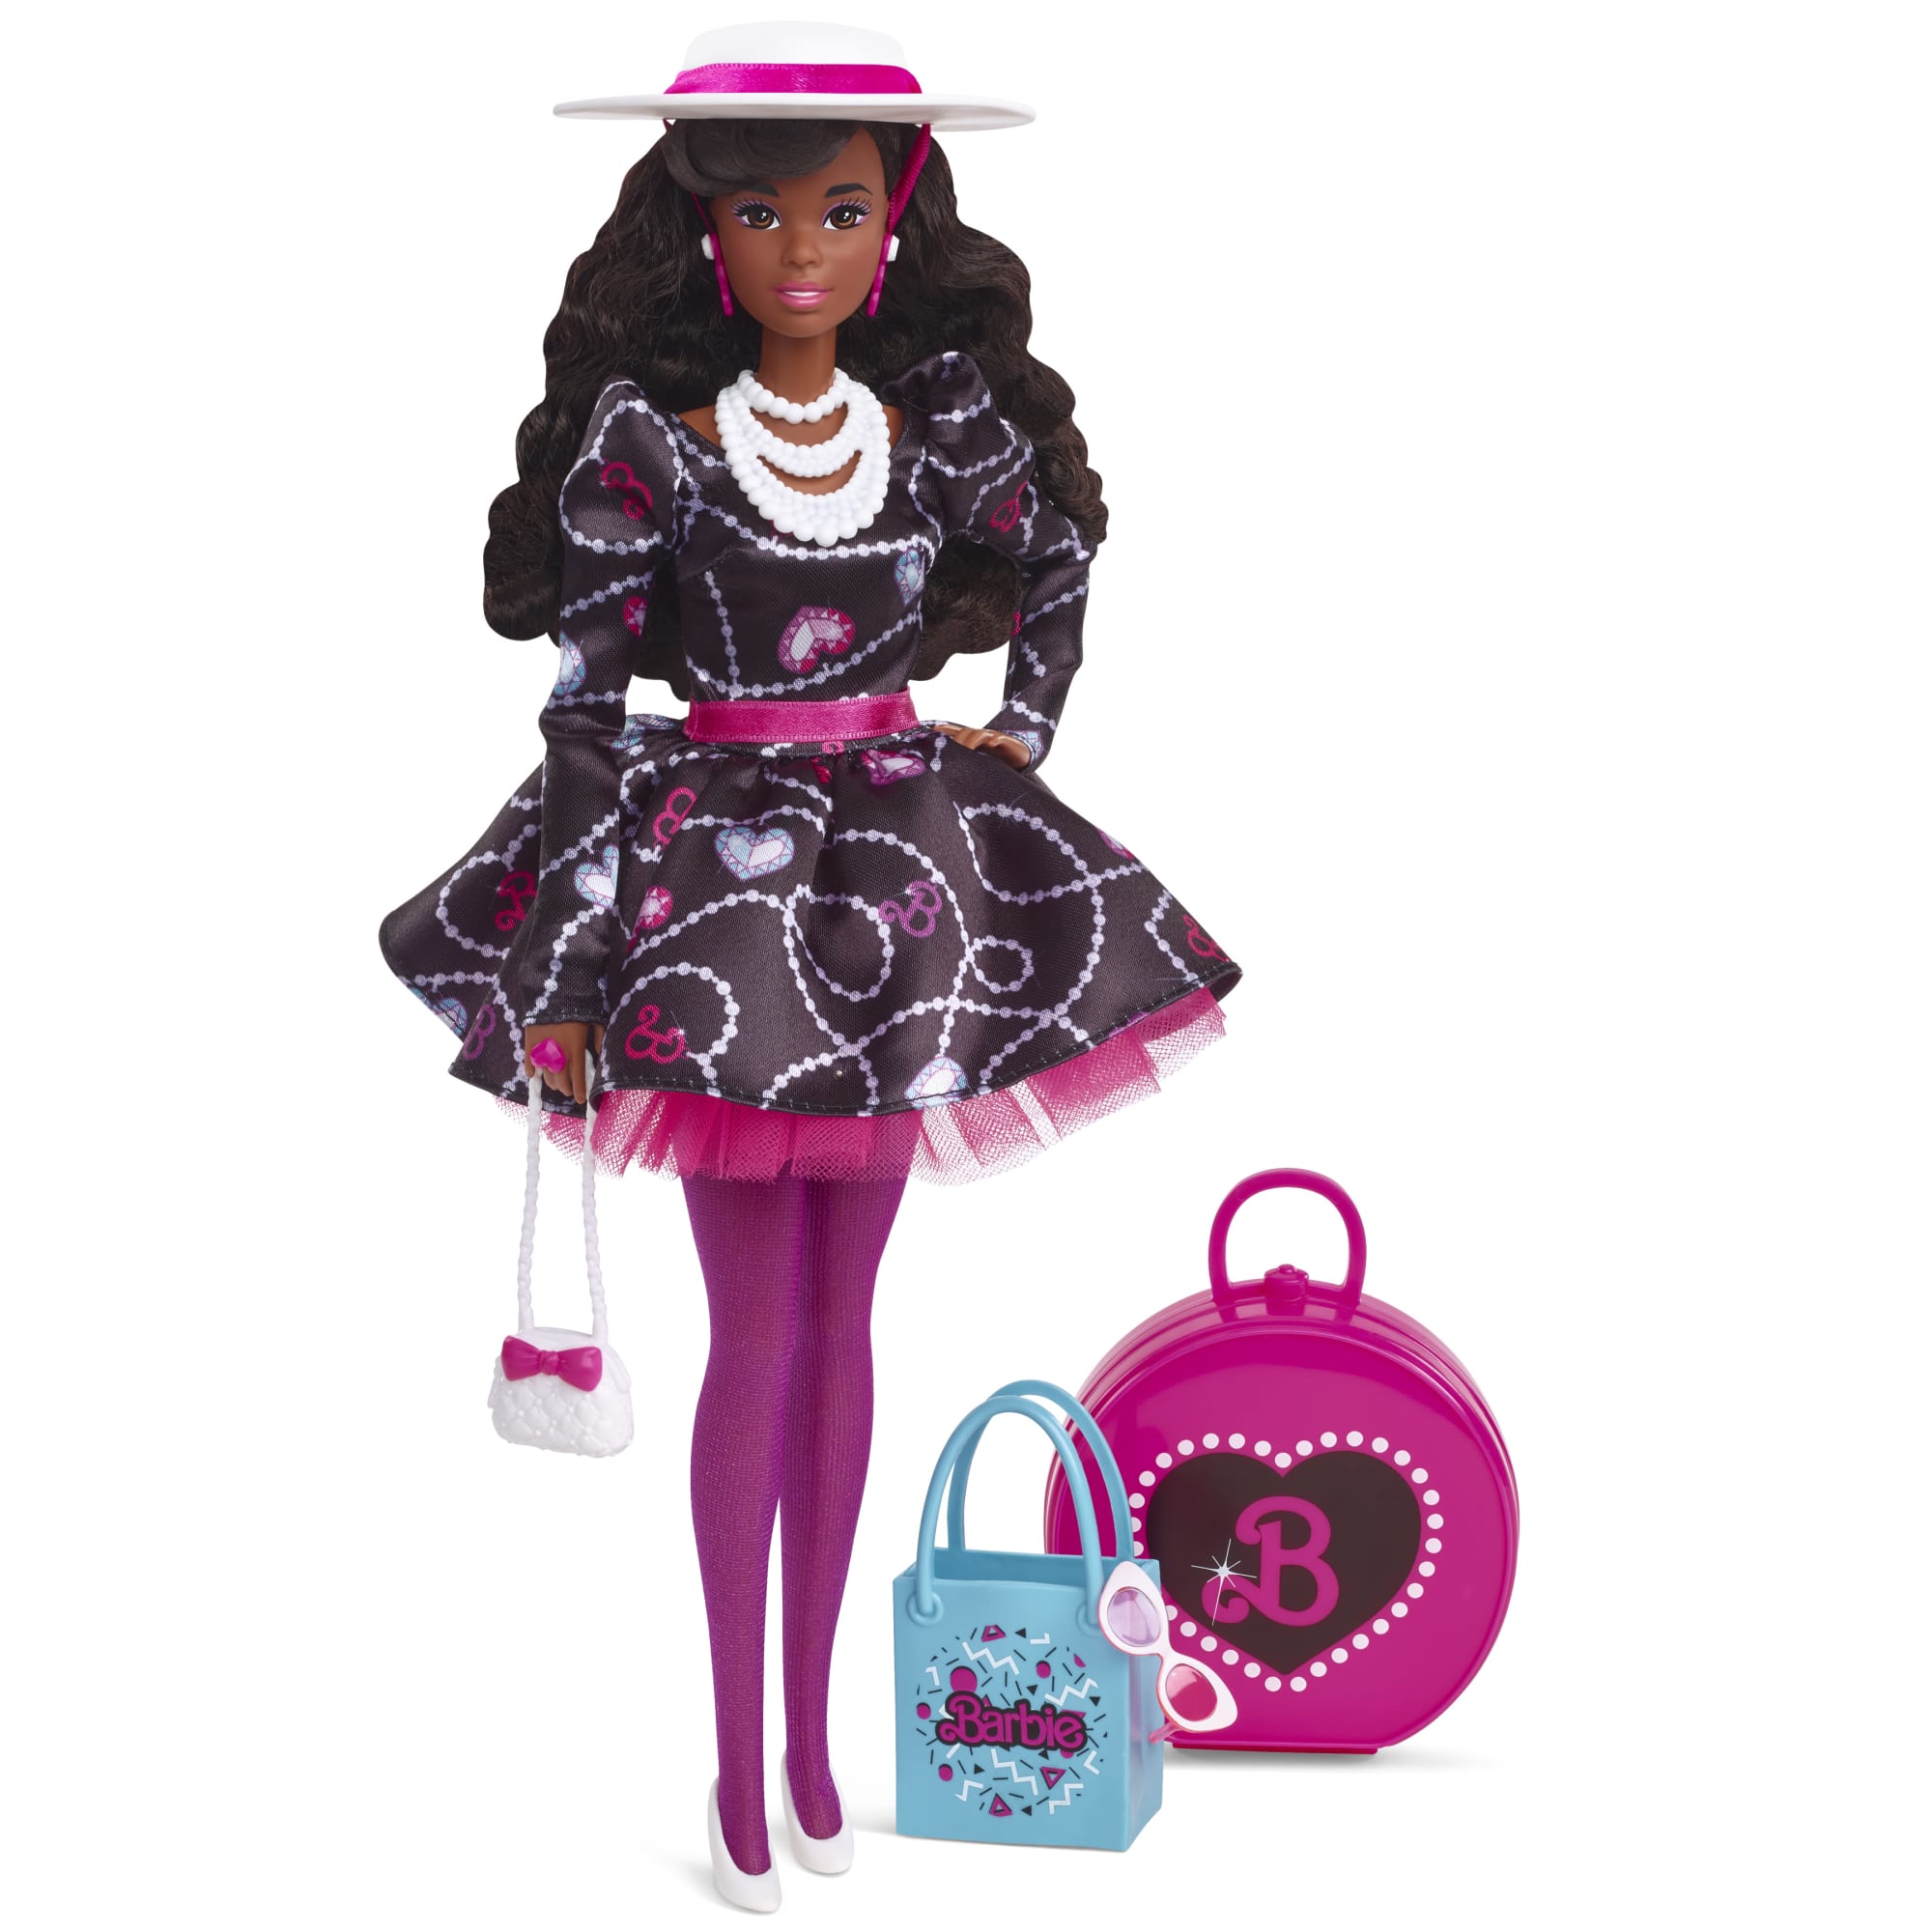 Barbie Rewind Doll and Accessories | Mattel